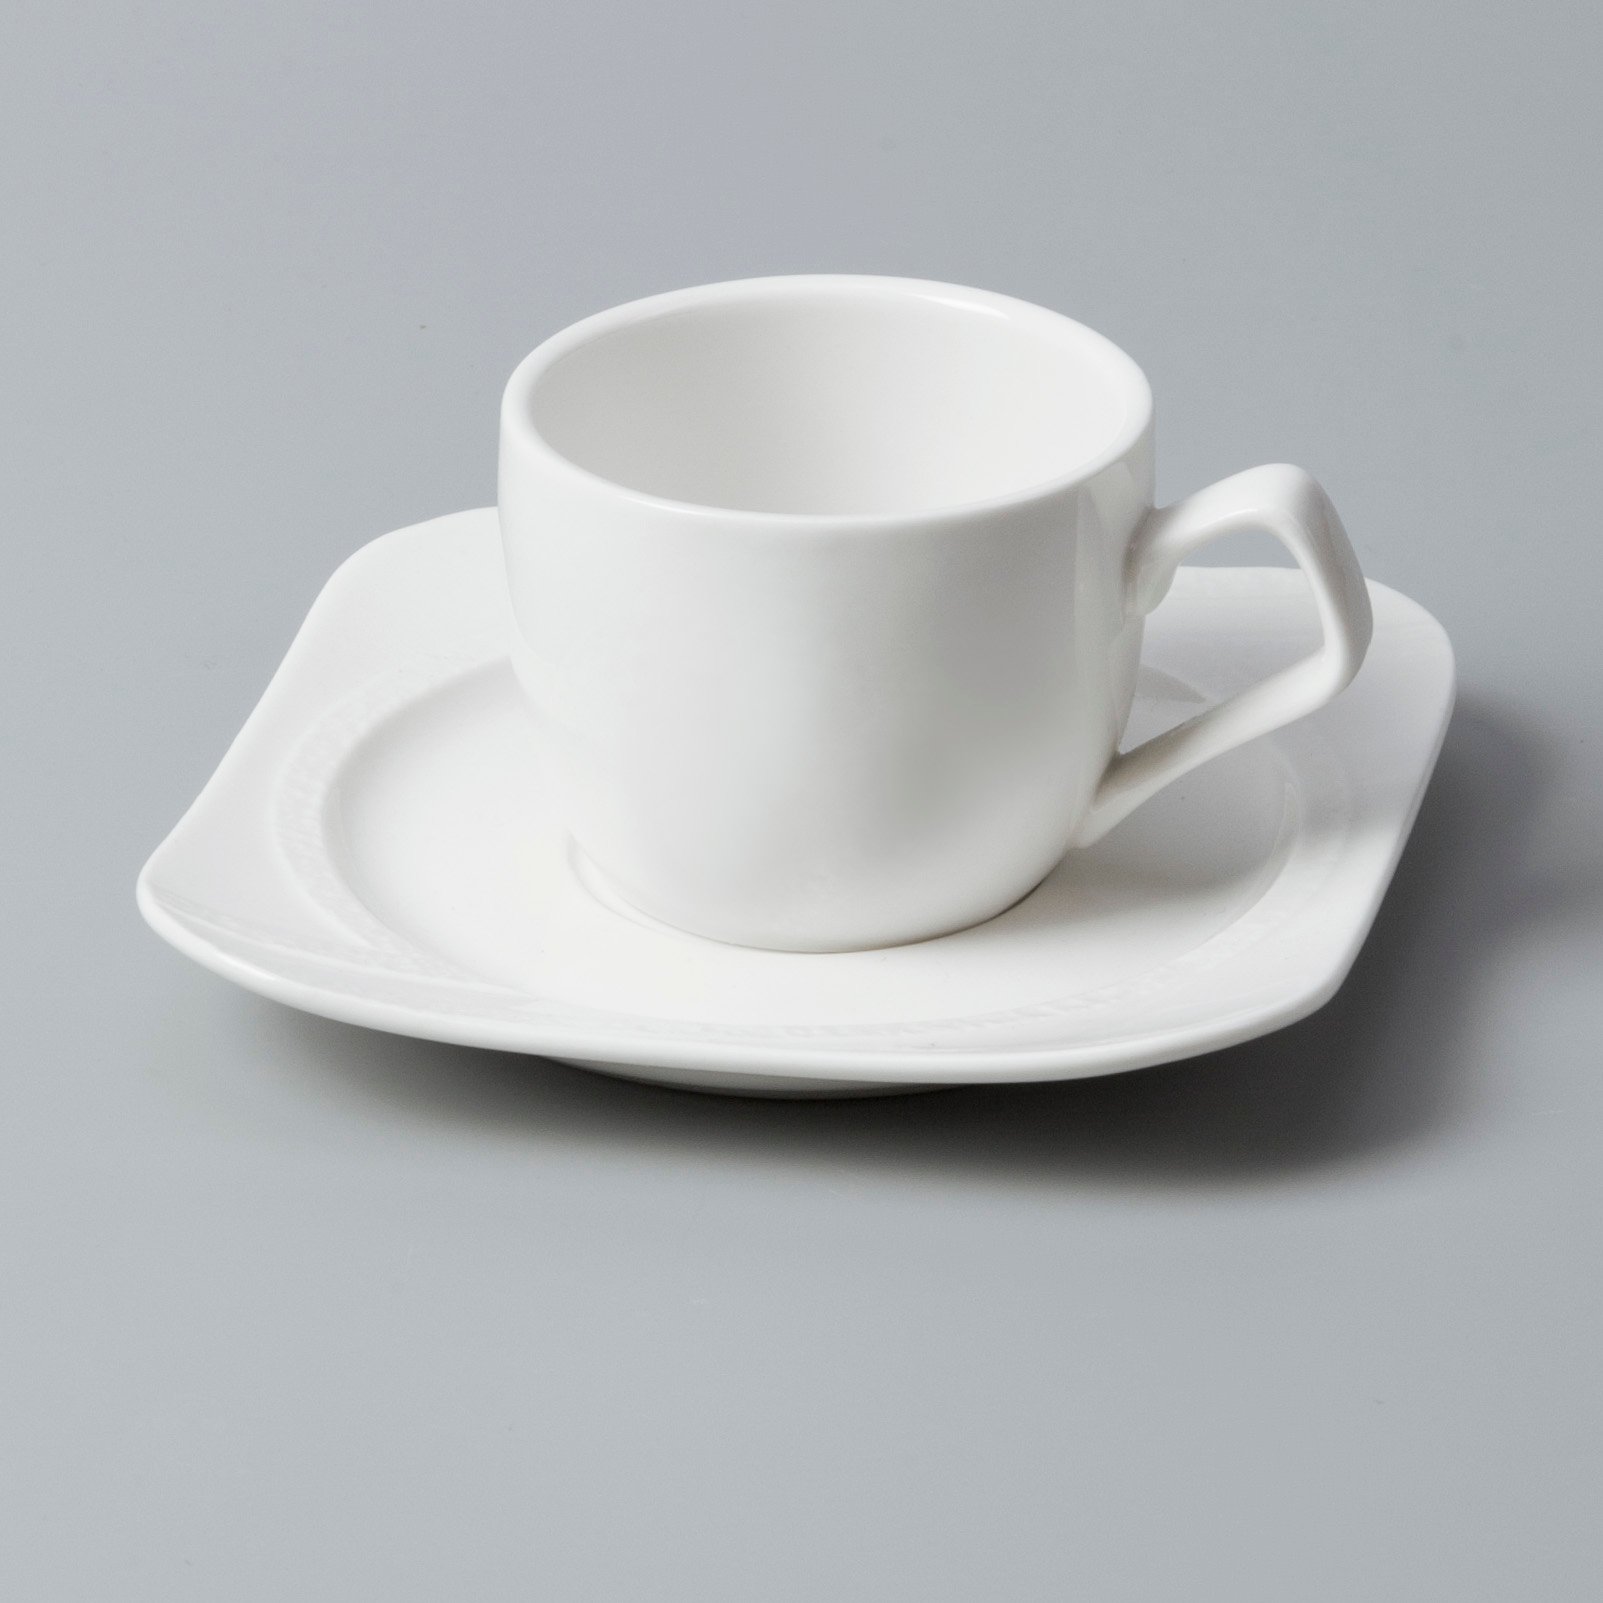 Latest best porcelain dinnerware in the world manufacturers for restaurant-7